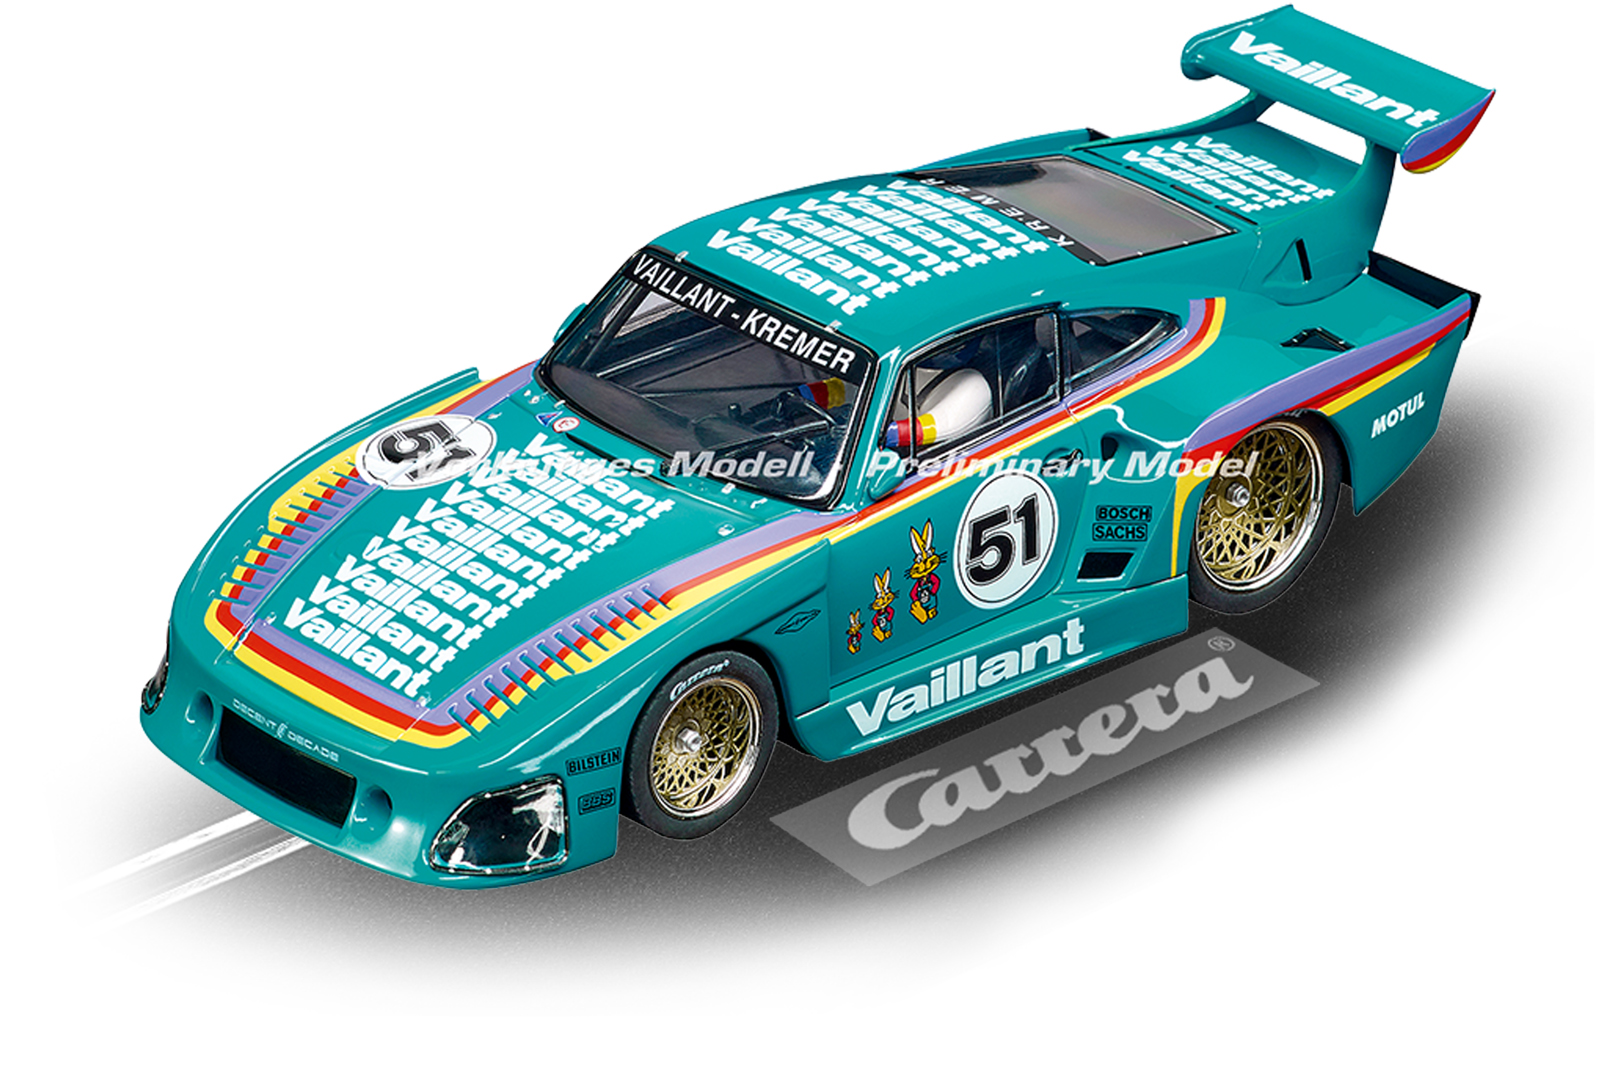 Carrera 30898 - Porsche Kremer 935 K3 #51 - Vaillant - Digital 132